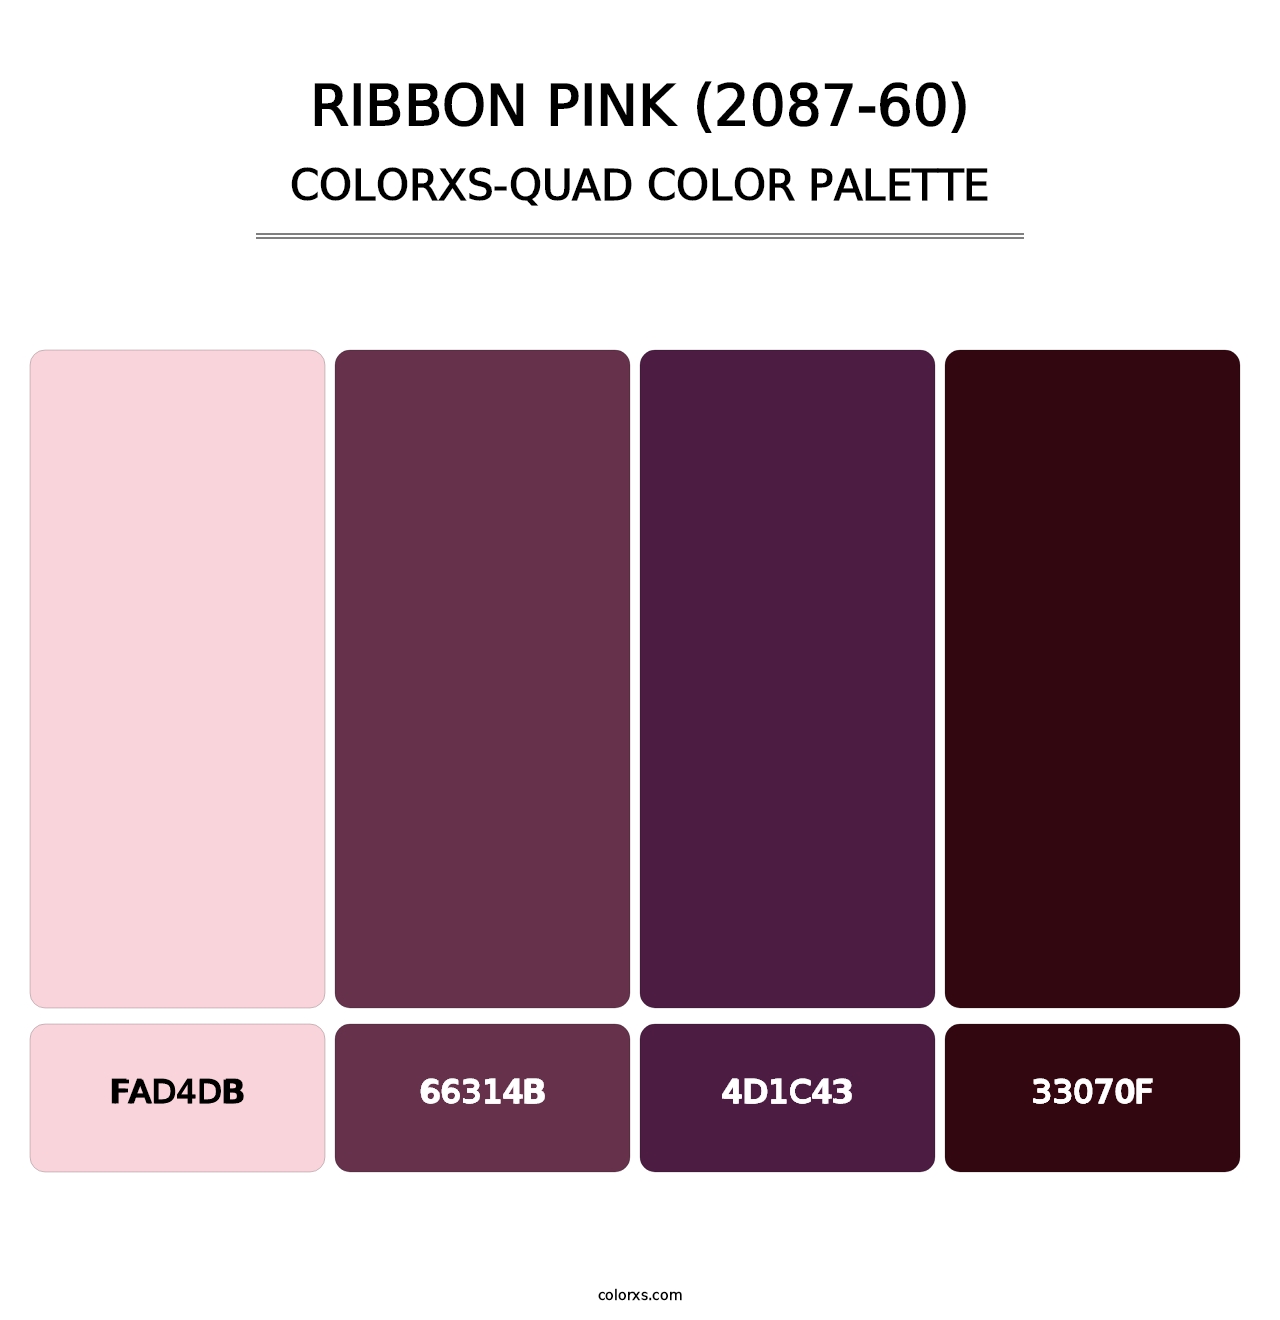 Ribbon Pink (2087-60) - Colorxs Quad Palette